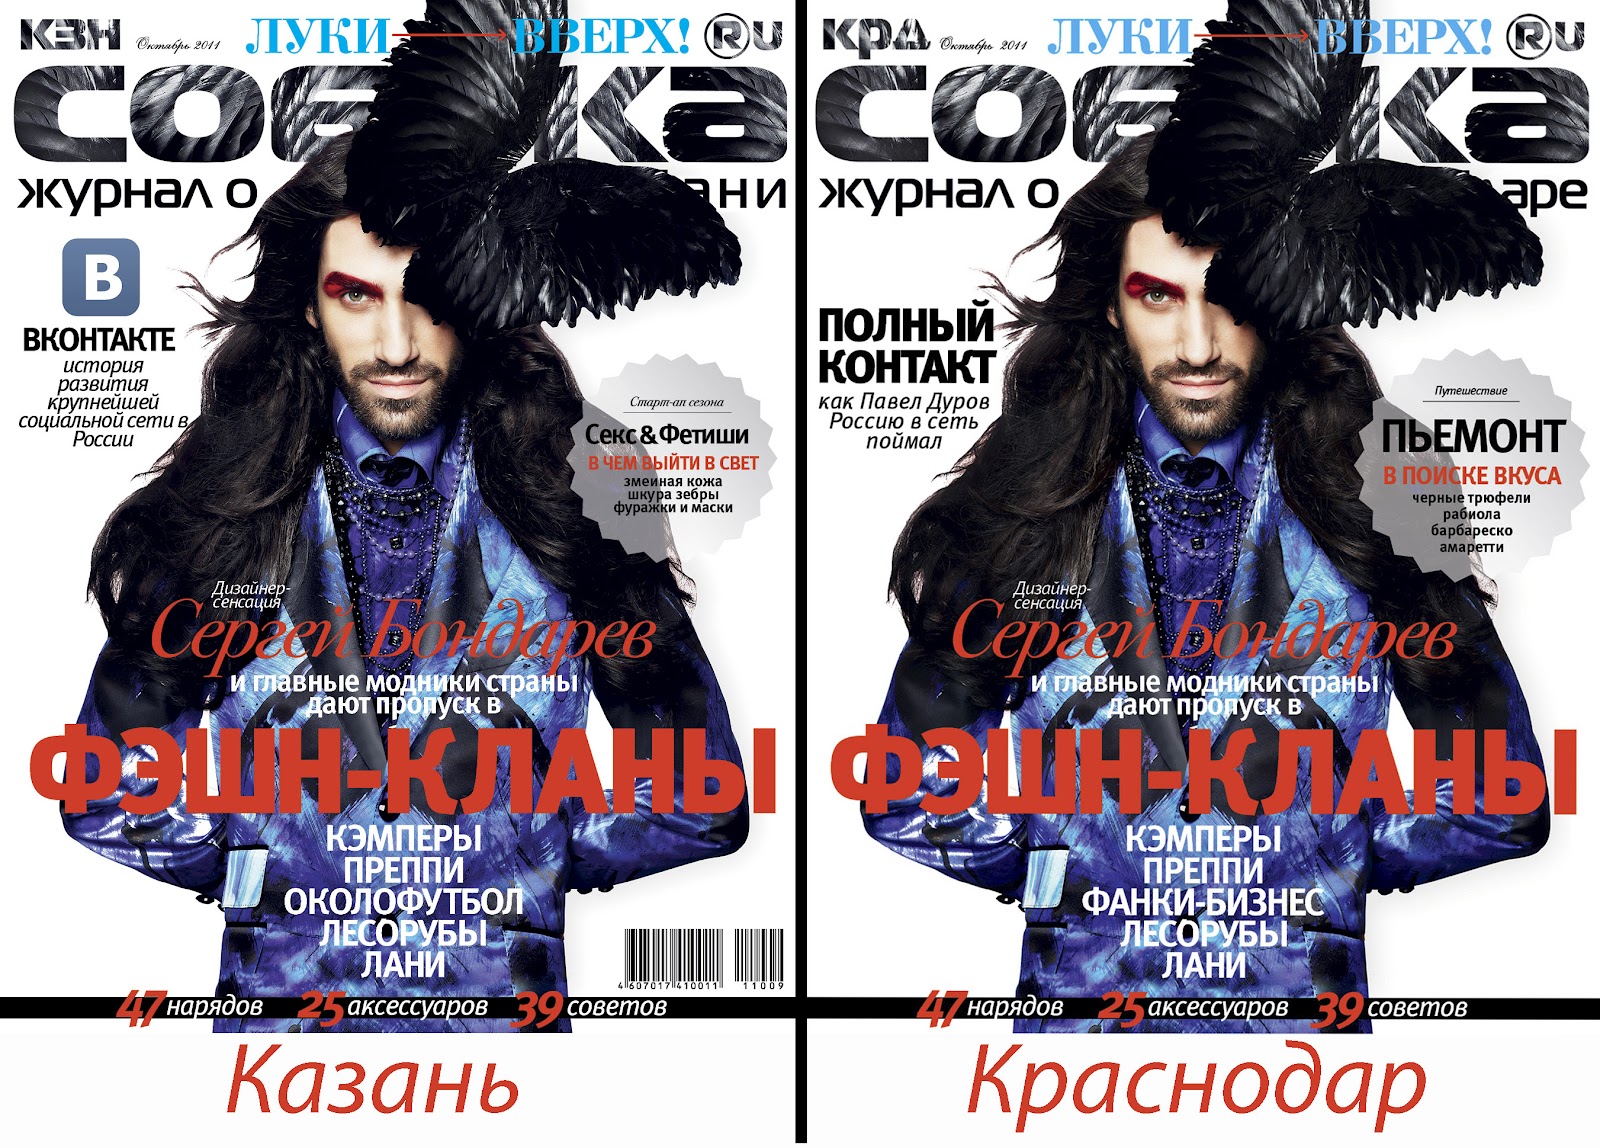 Vk magazines. Журнал look. Журнал ВК. Лук из журнала. Журнал ВК фото.